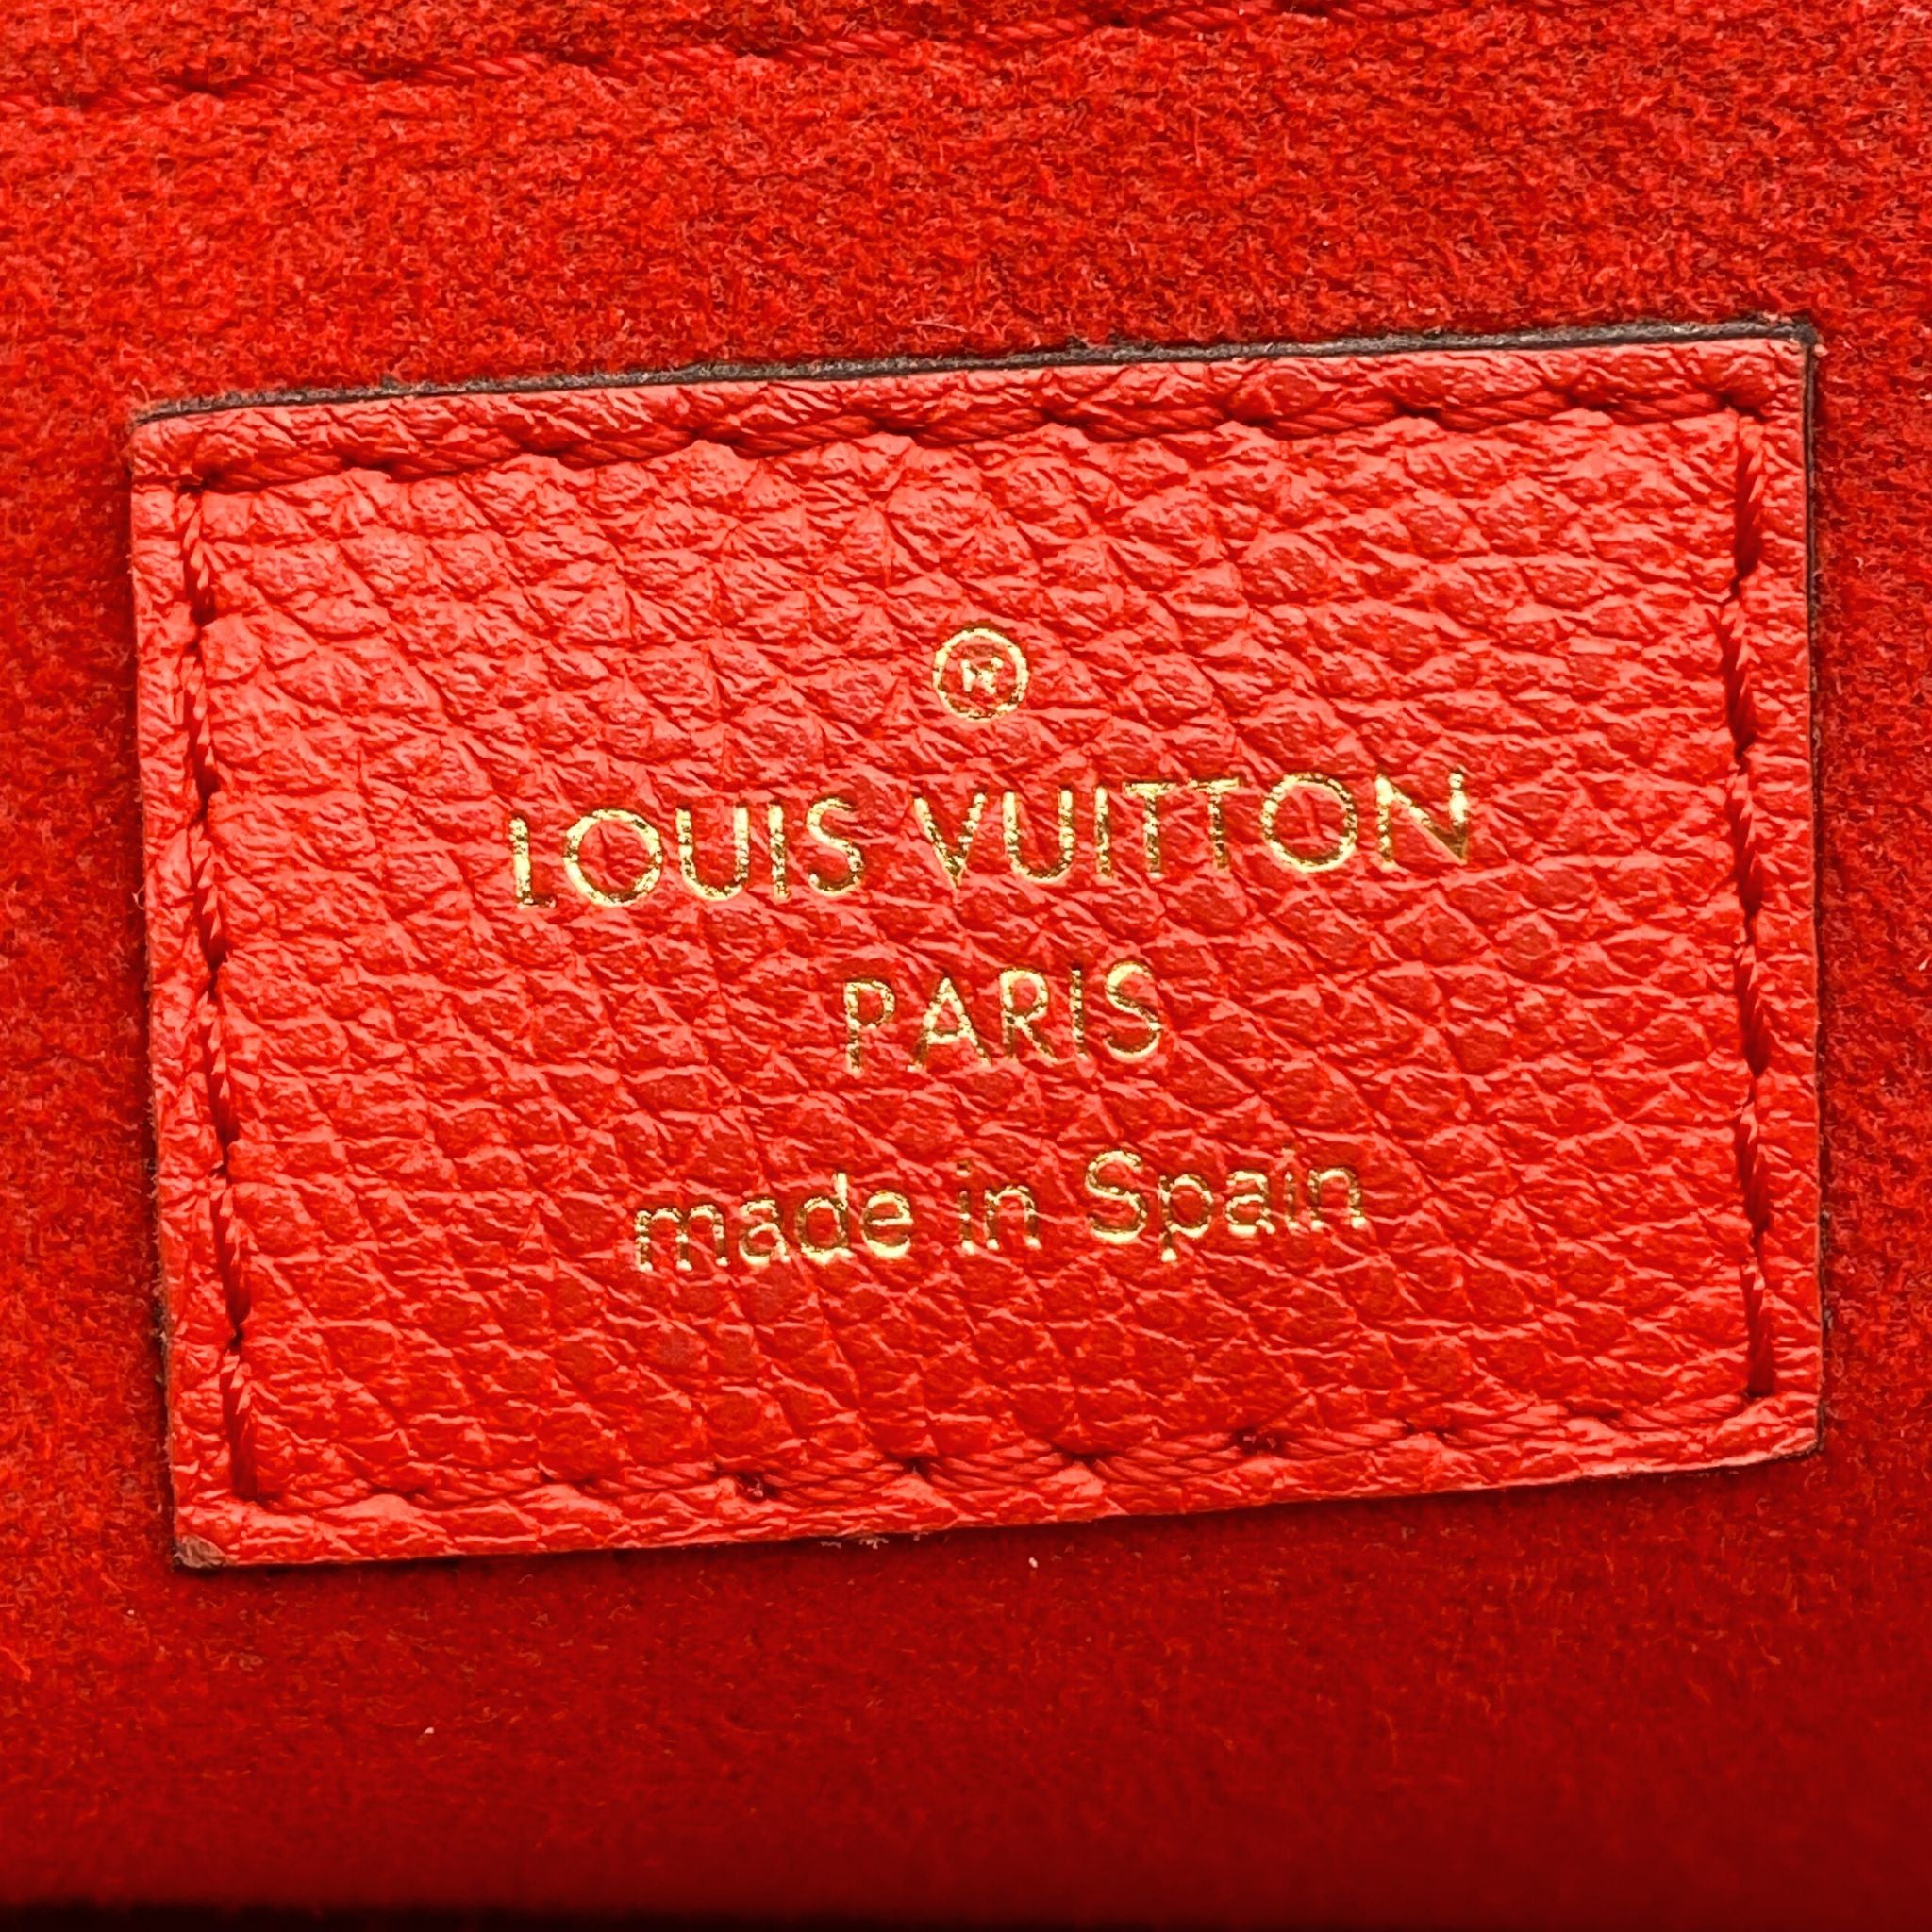 Where Is Louis Vuitton Made?